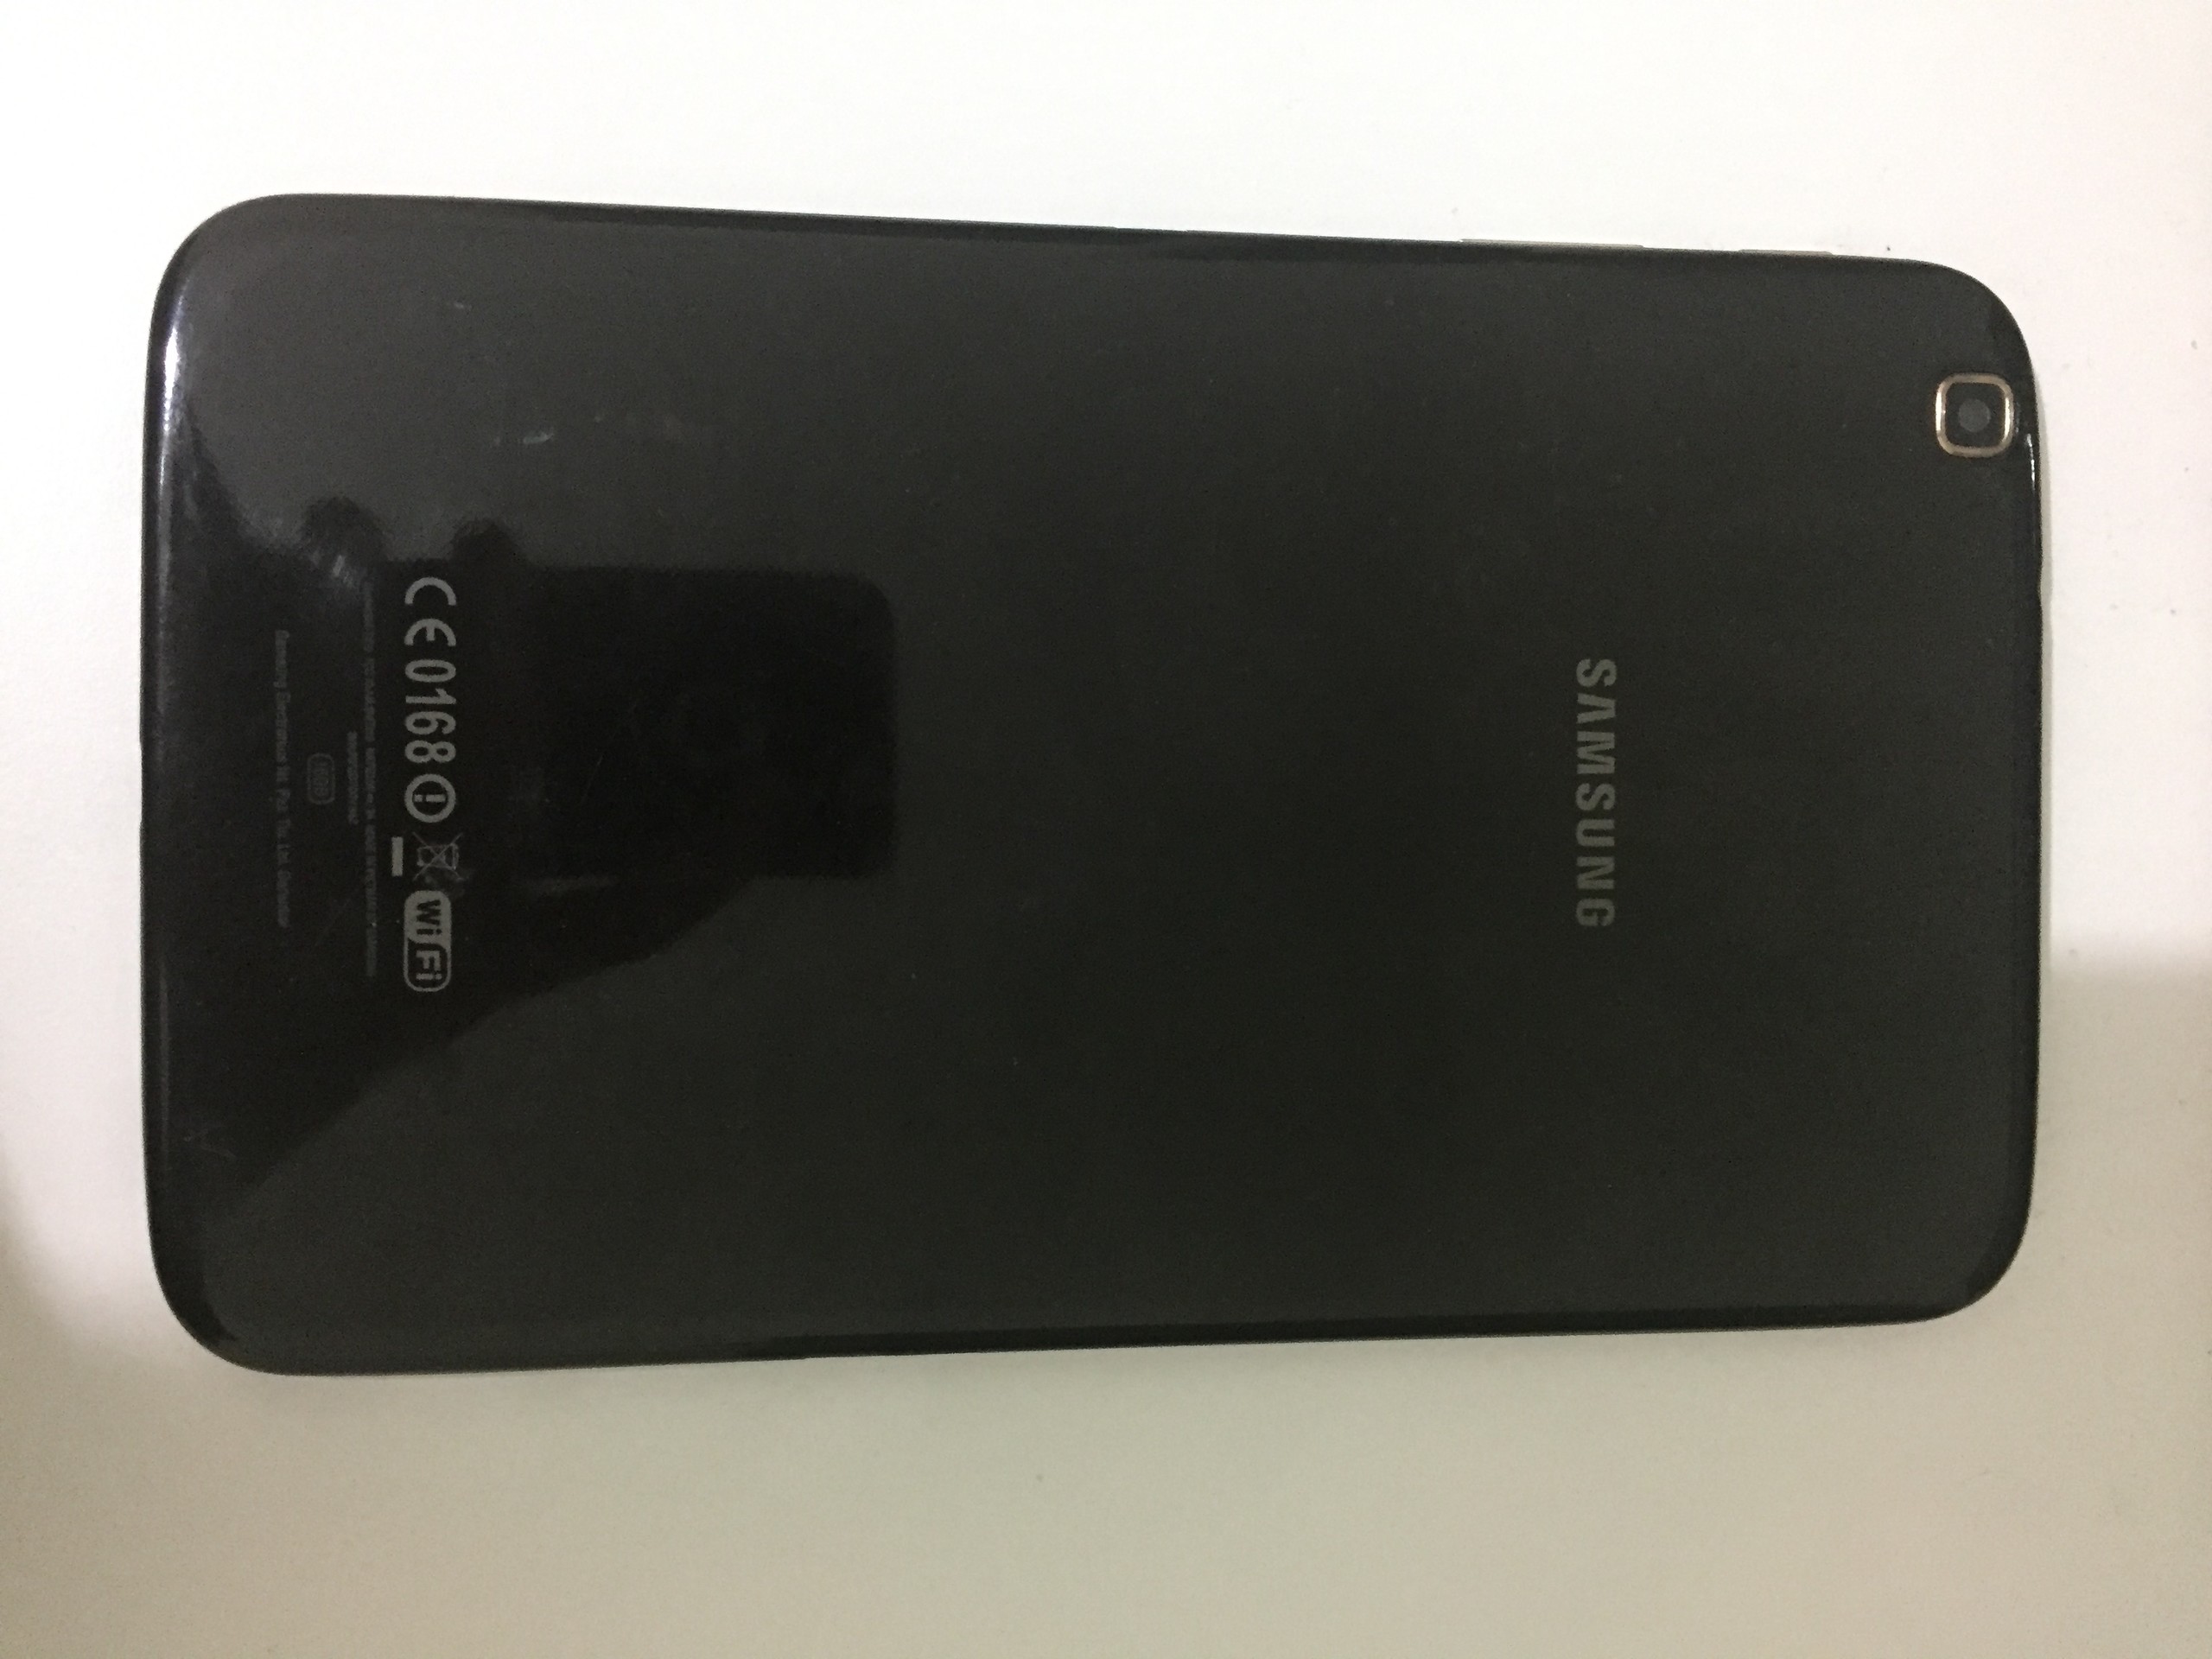 Samsung Galaxy Tab 3 8.0 Tablet == > 300 TL